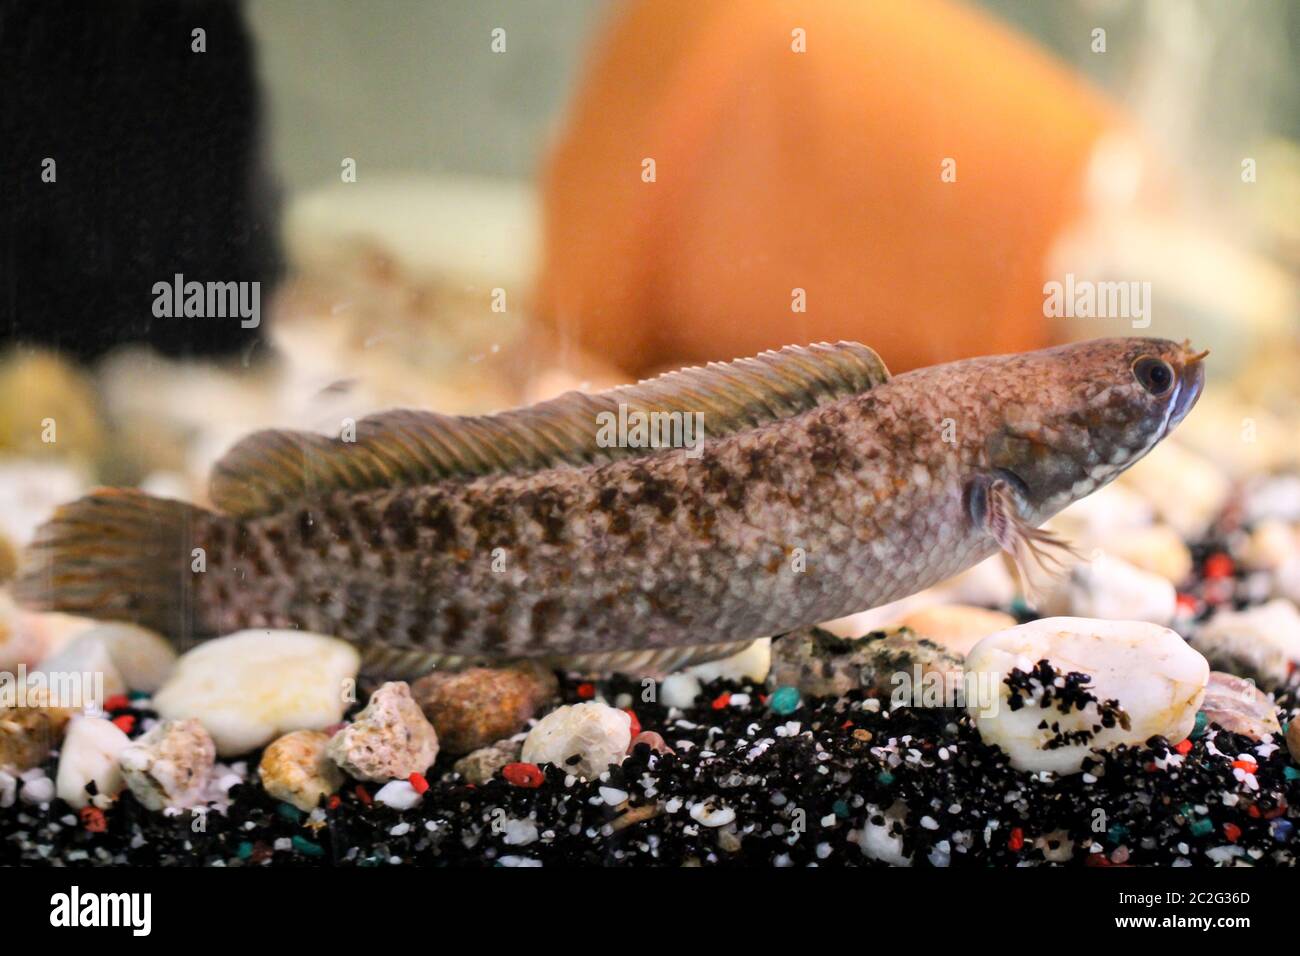 View, portrait of a snakehead fish in aquarium Stock Photo